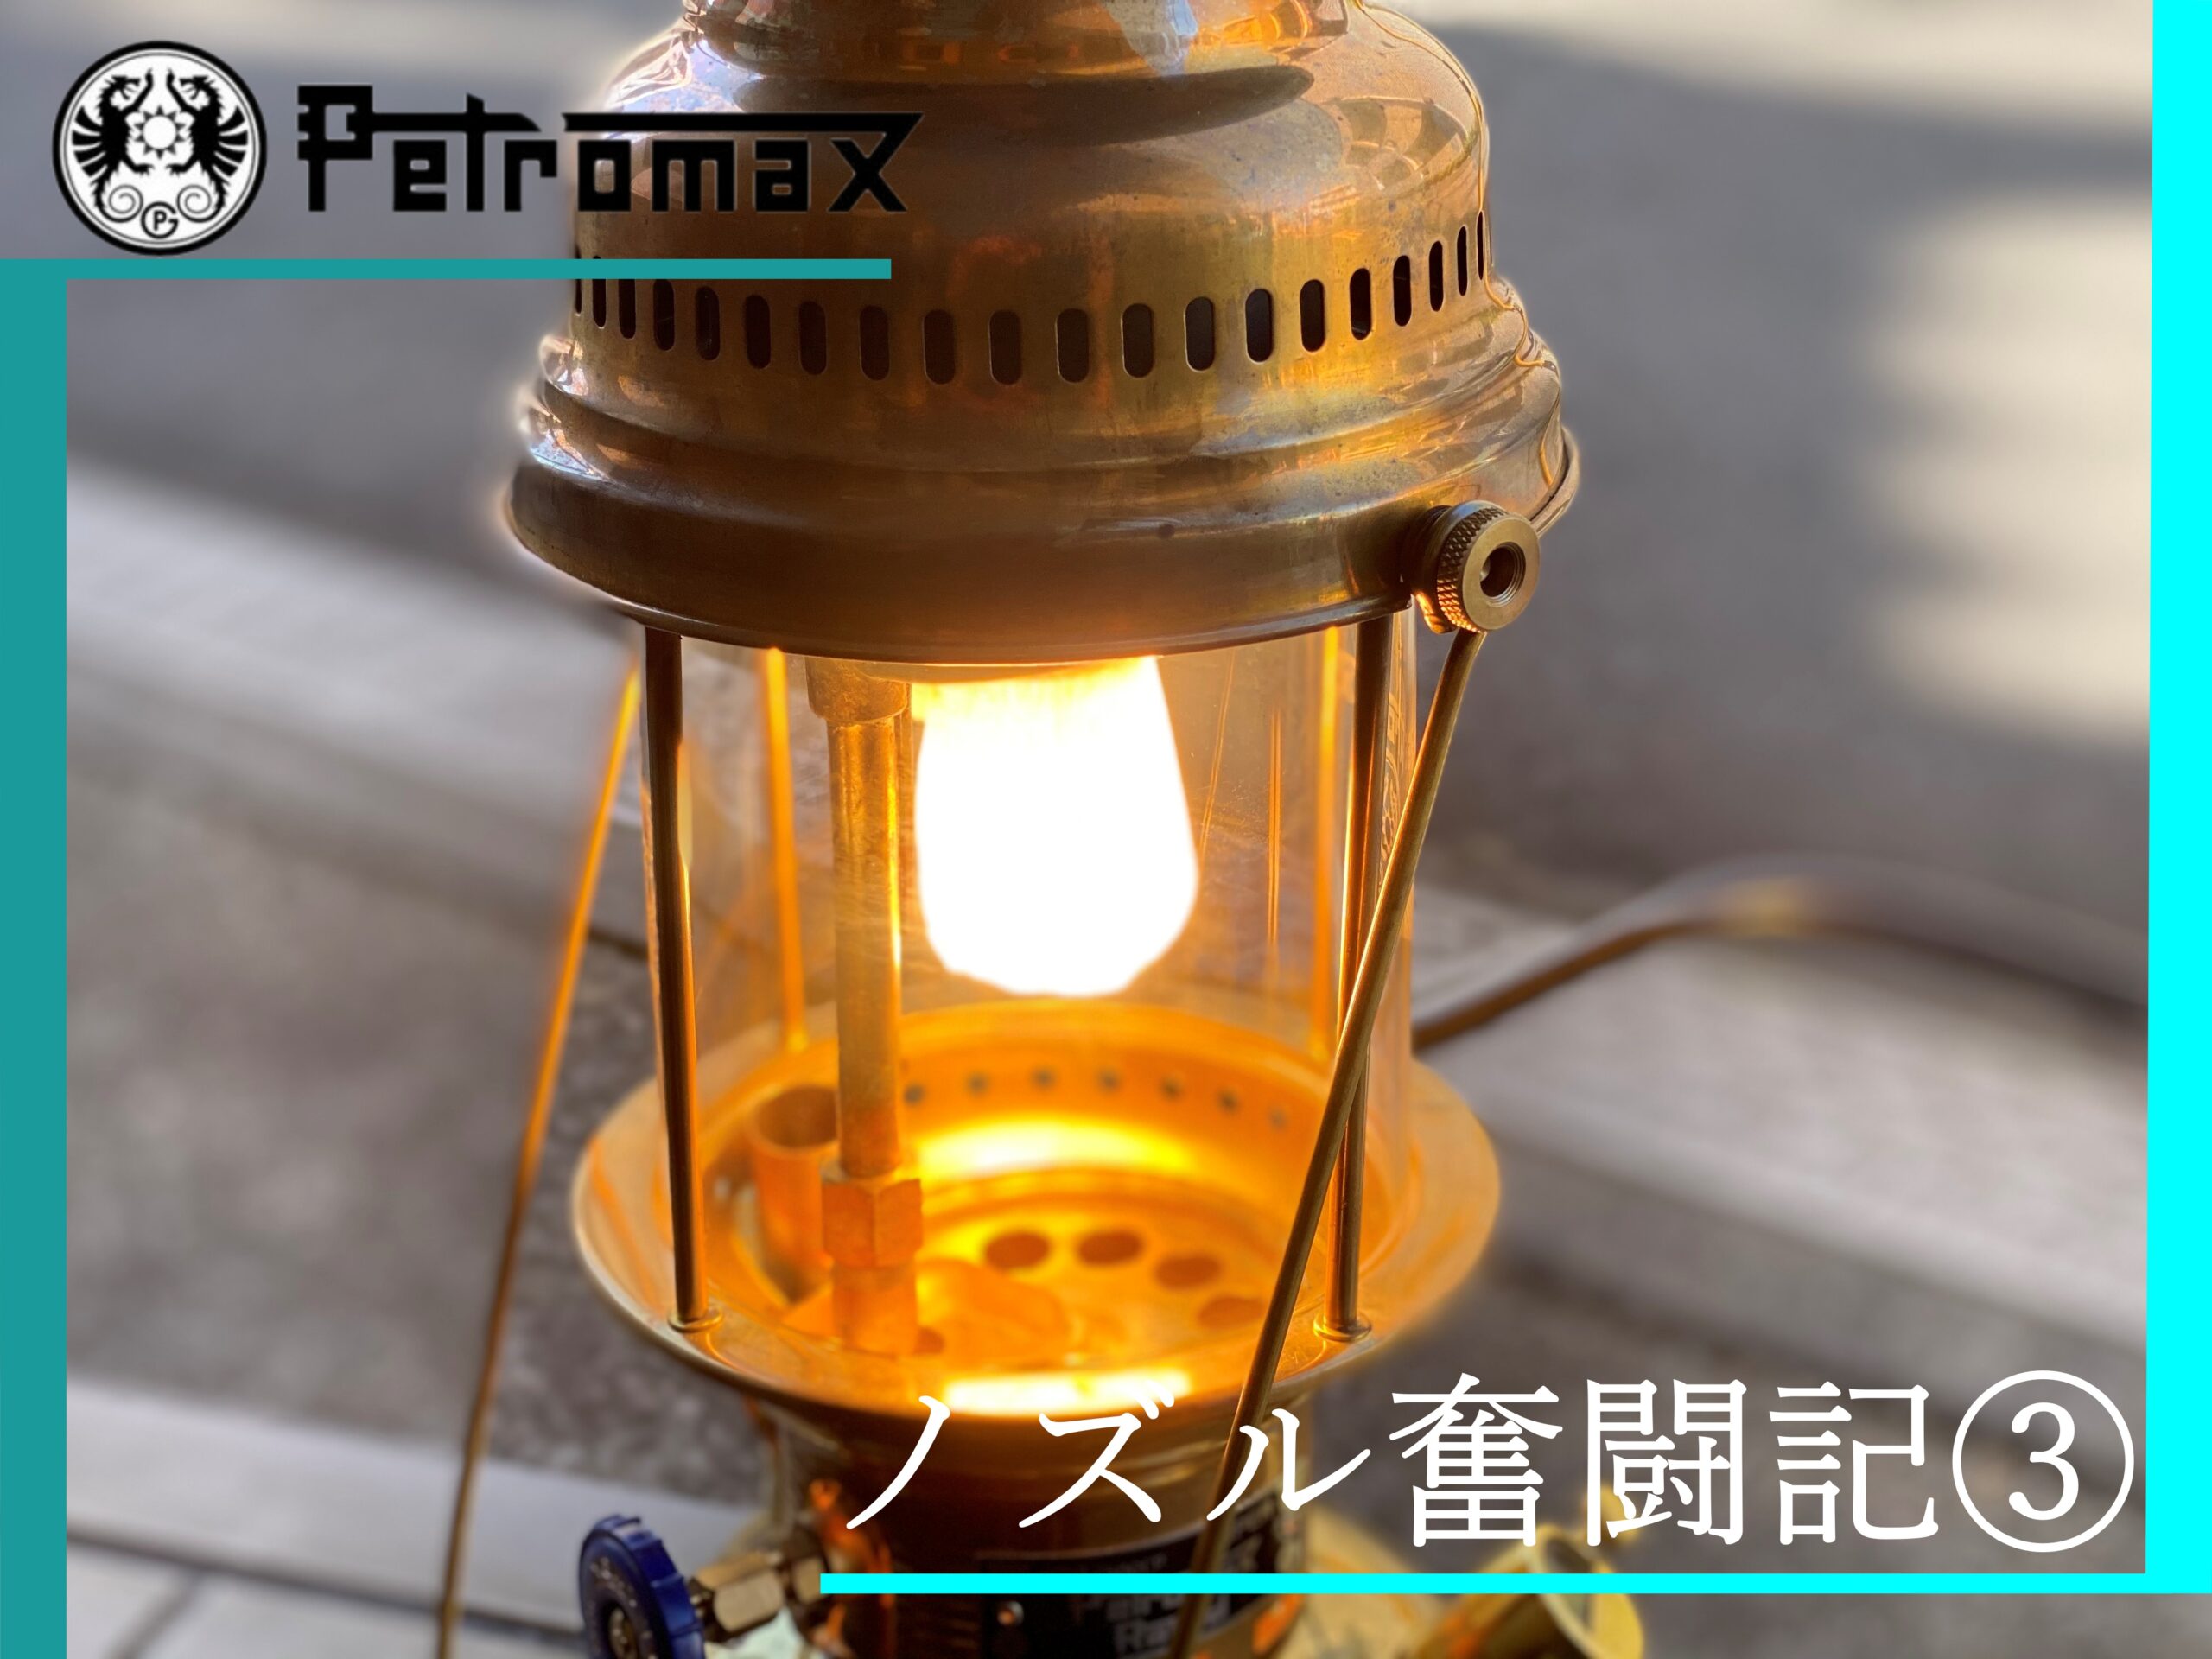 Petromax（ペトロマックス）hk500のノズルが緩んでしまう件②/空気圧編 - 新宿キャンパー！